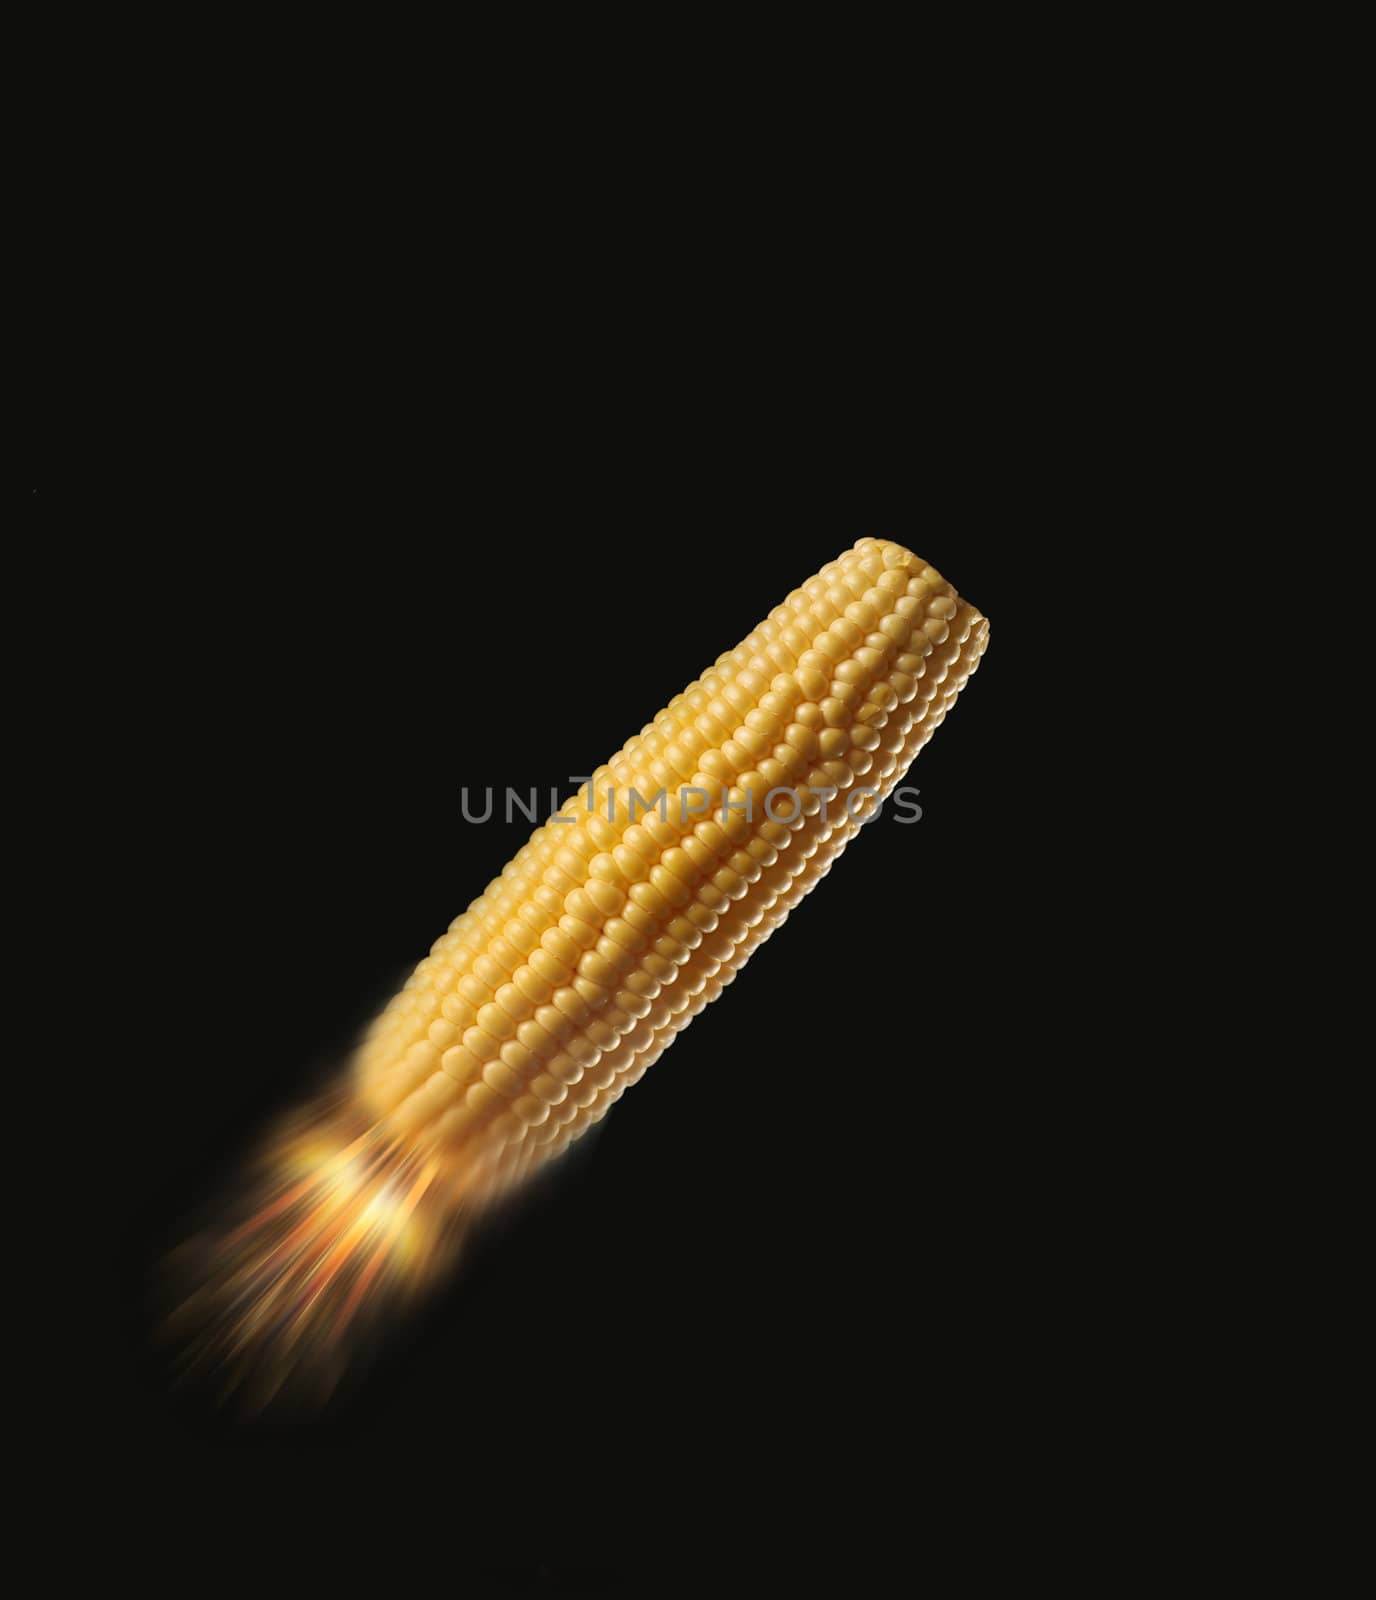 Bio Fuel Corn Cob by alistaircotton